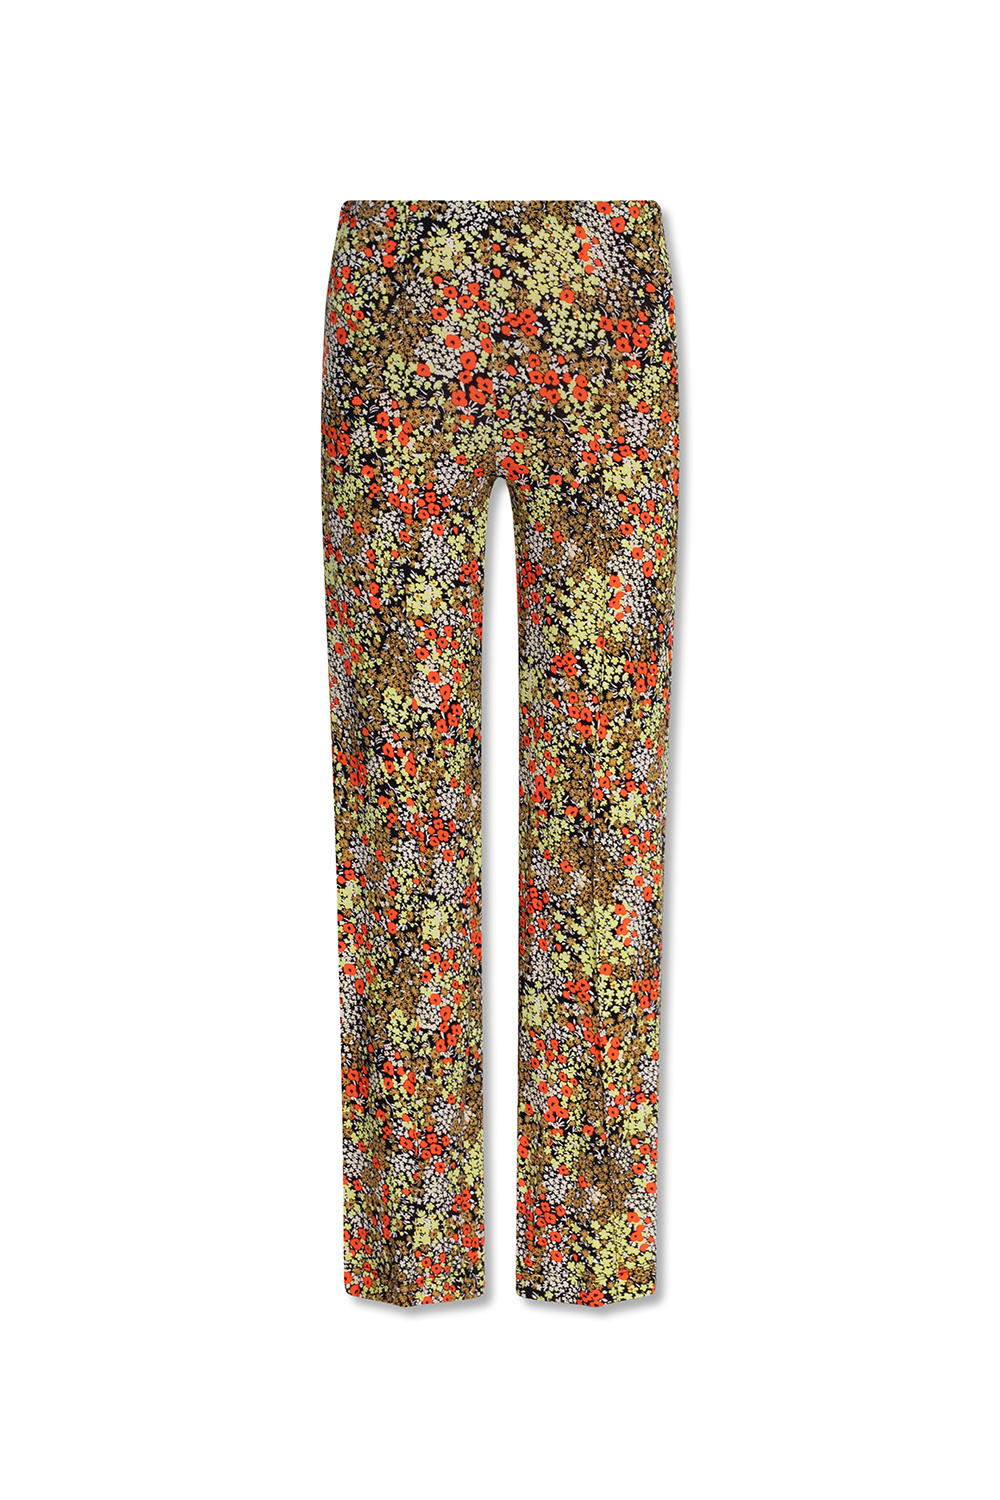 Samsøe Samsøe 'Lolly' trousers with floral motif, IetpShops, Women's  Clothing